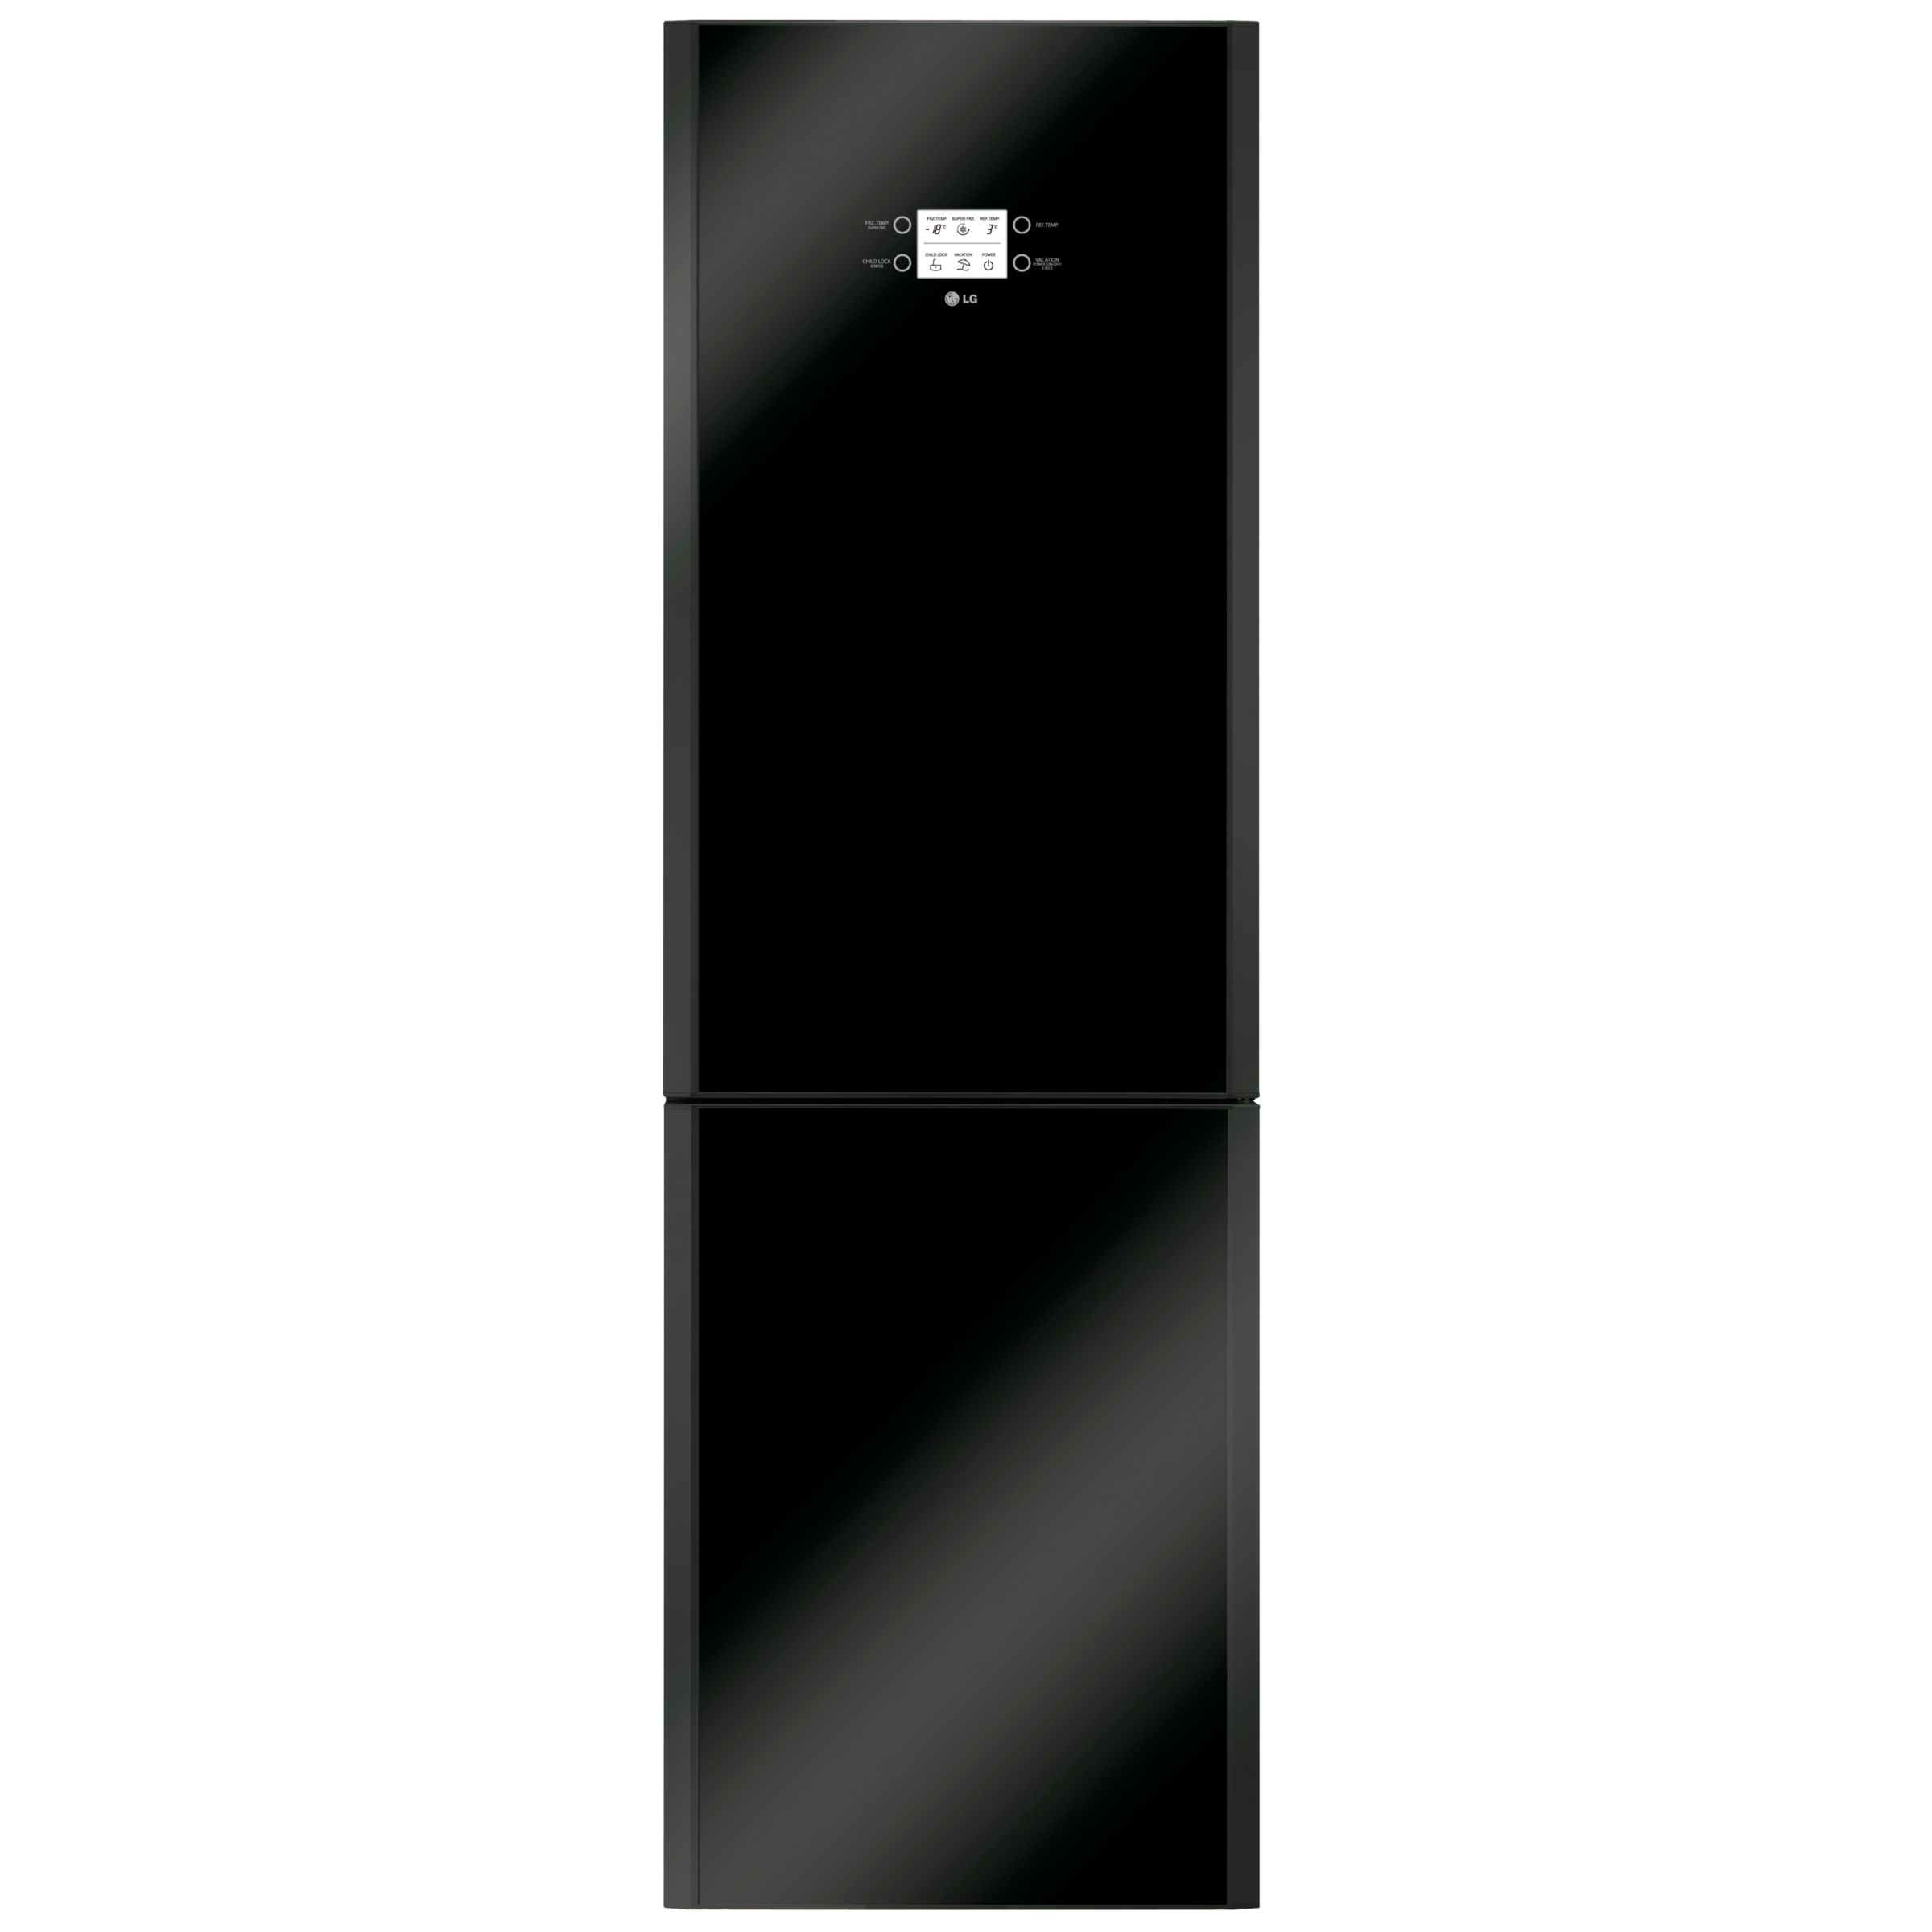 LG GB5533BMTW Fridge Freezer, Black Glass at John Lewis